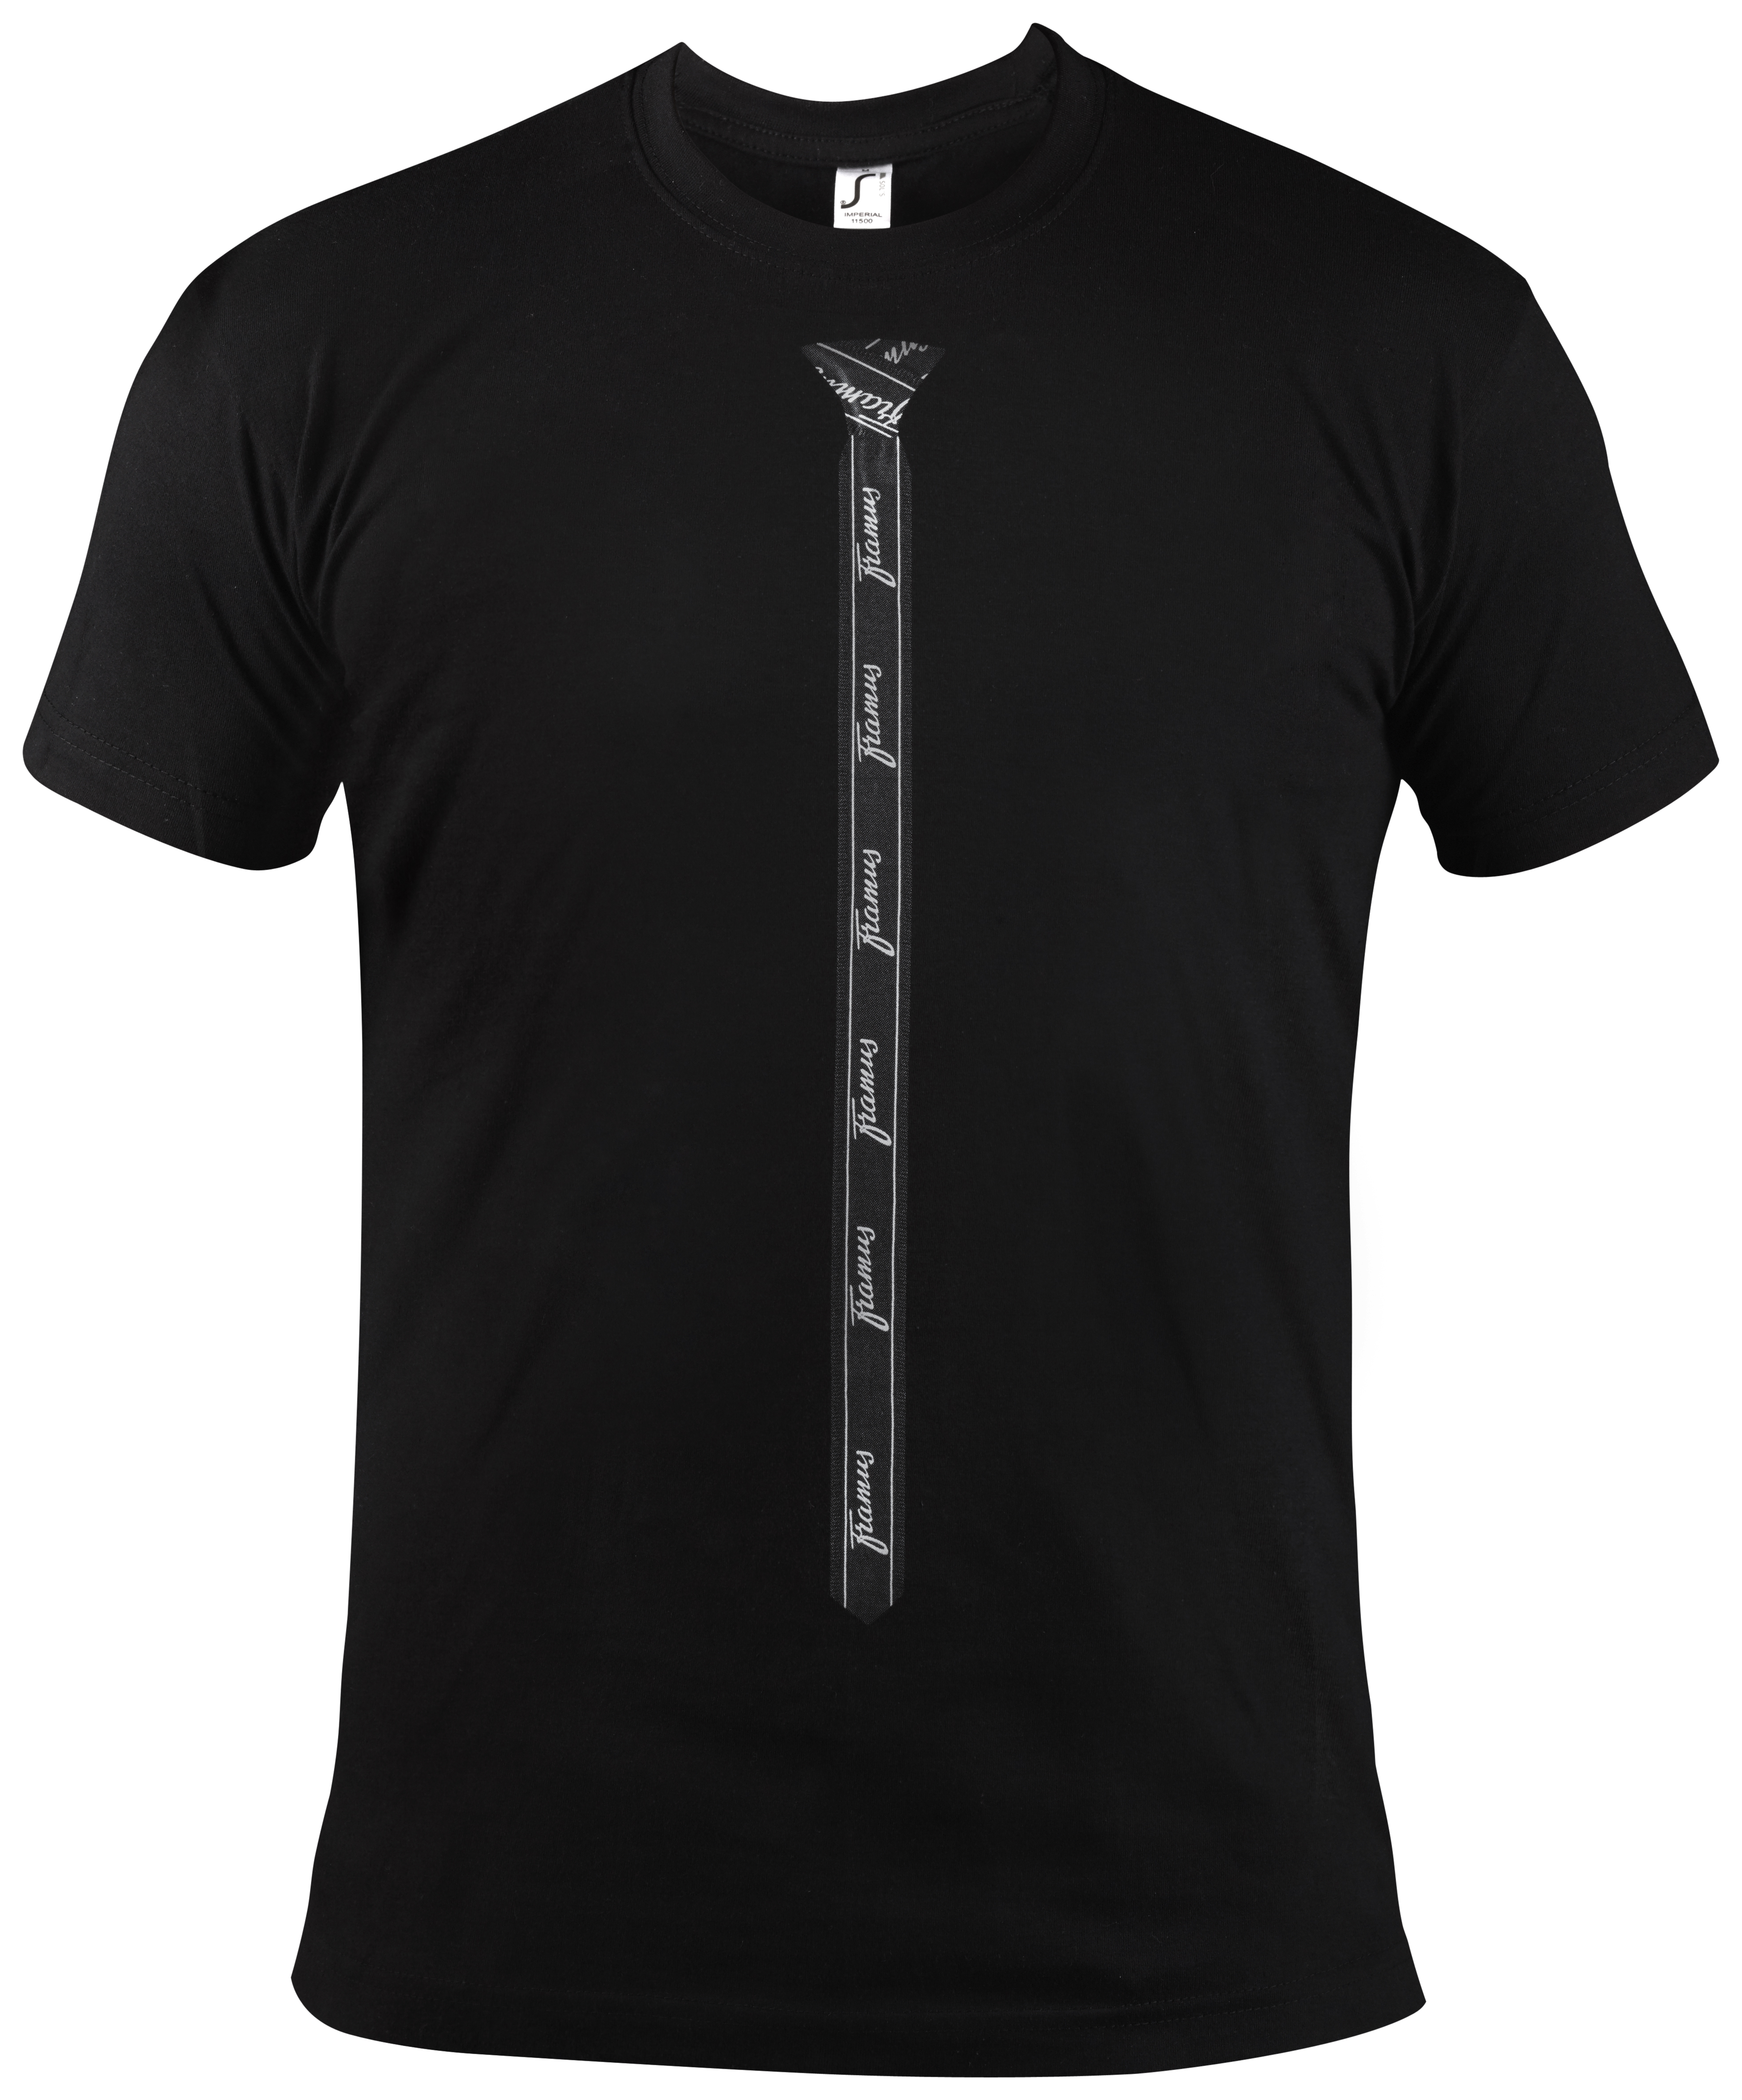 Framus Promo - Tie - T-Shirt - Male / Size M